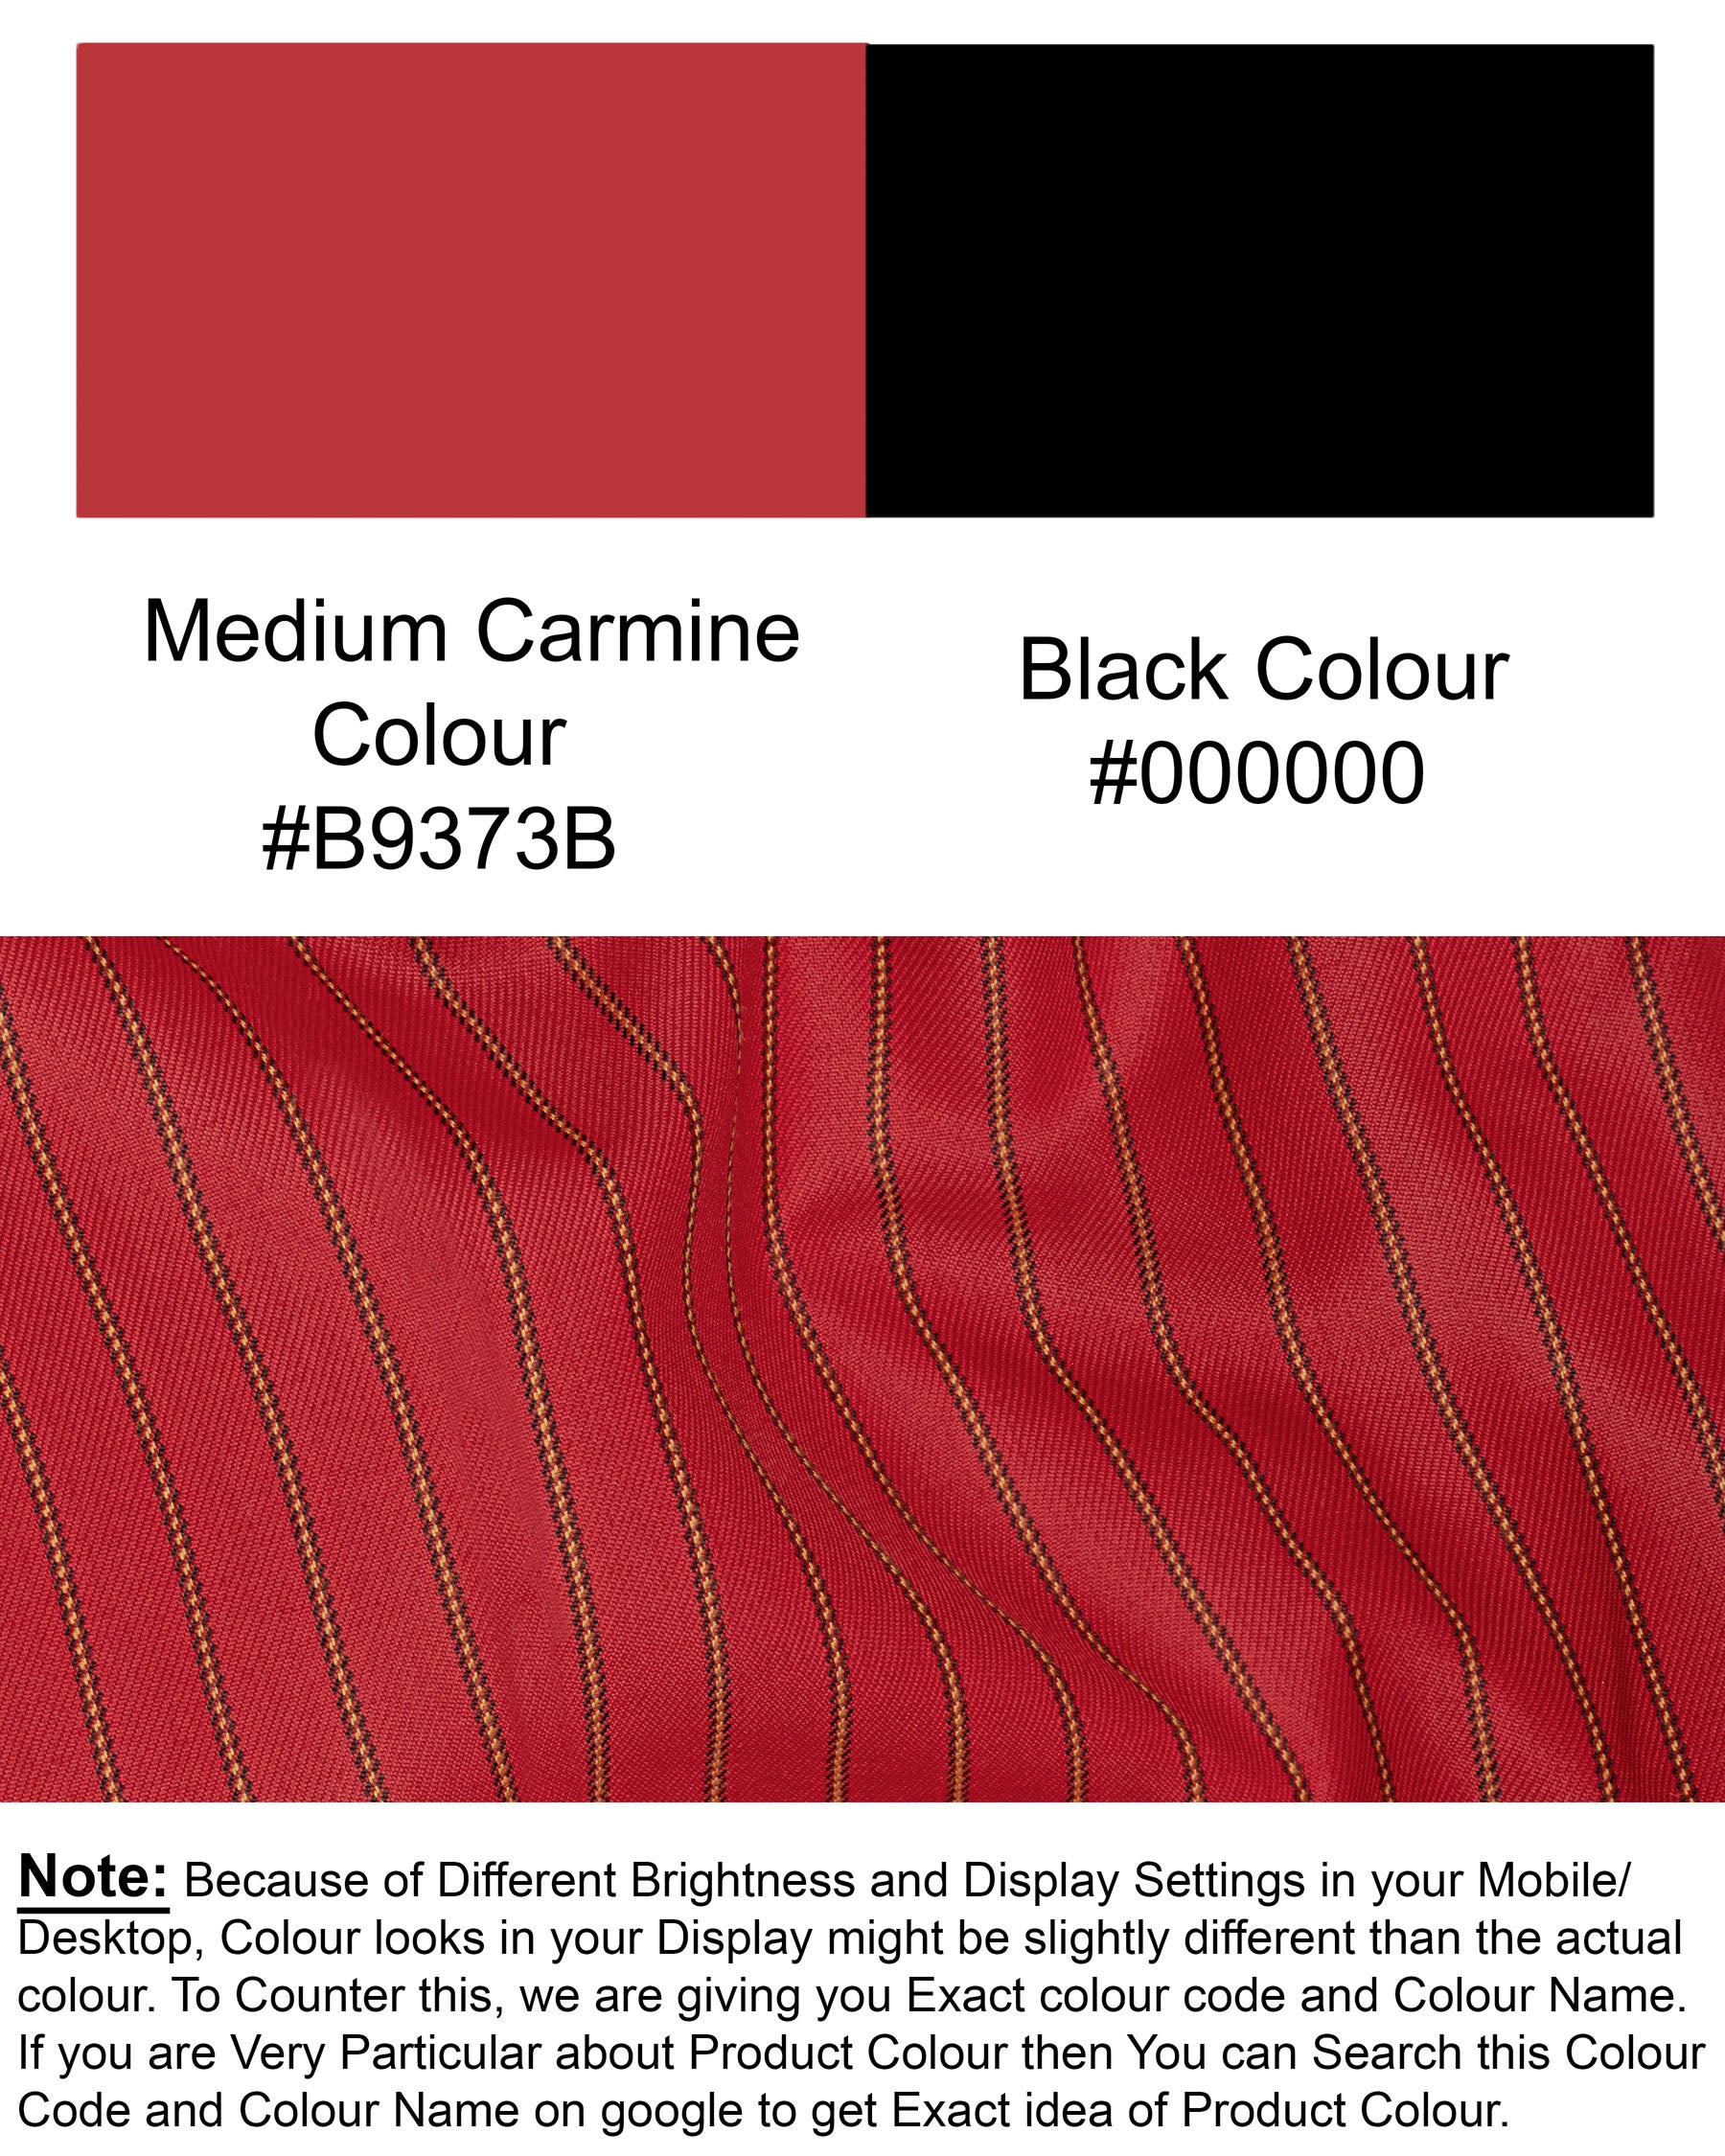 Medium Carmine Red Striped Wool Rich Cross Buttoned Bandhgala Suit ST1505-CBG2-36, ST1505-CBG2-38, ST1505-CBG2-40, ST1505-CBG2-42, ST1505-CBG2-44, ST1505-CBG2-46, ST1505-CBG2-48, ST1505-CBG2-50, ST1505-CBG2-52, ST1505-CBG2-54, ST1505-CBG2-56, ST1505-CBG2-58, ST1505-CBG2-60